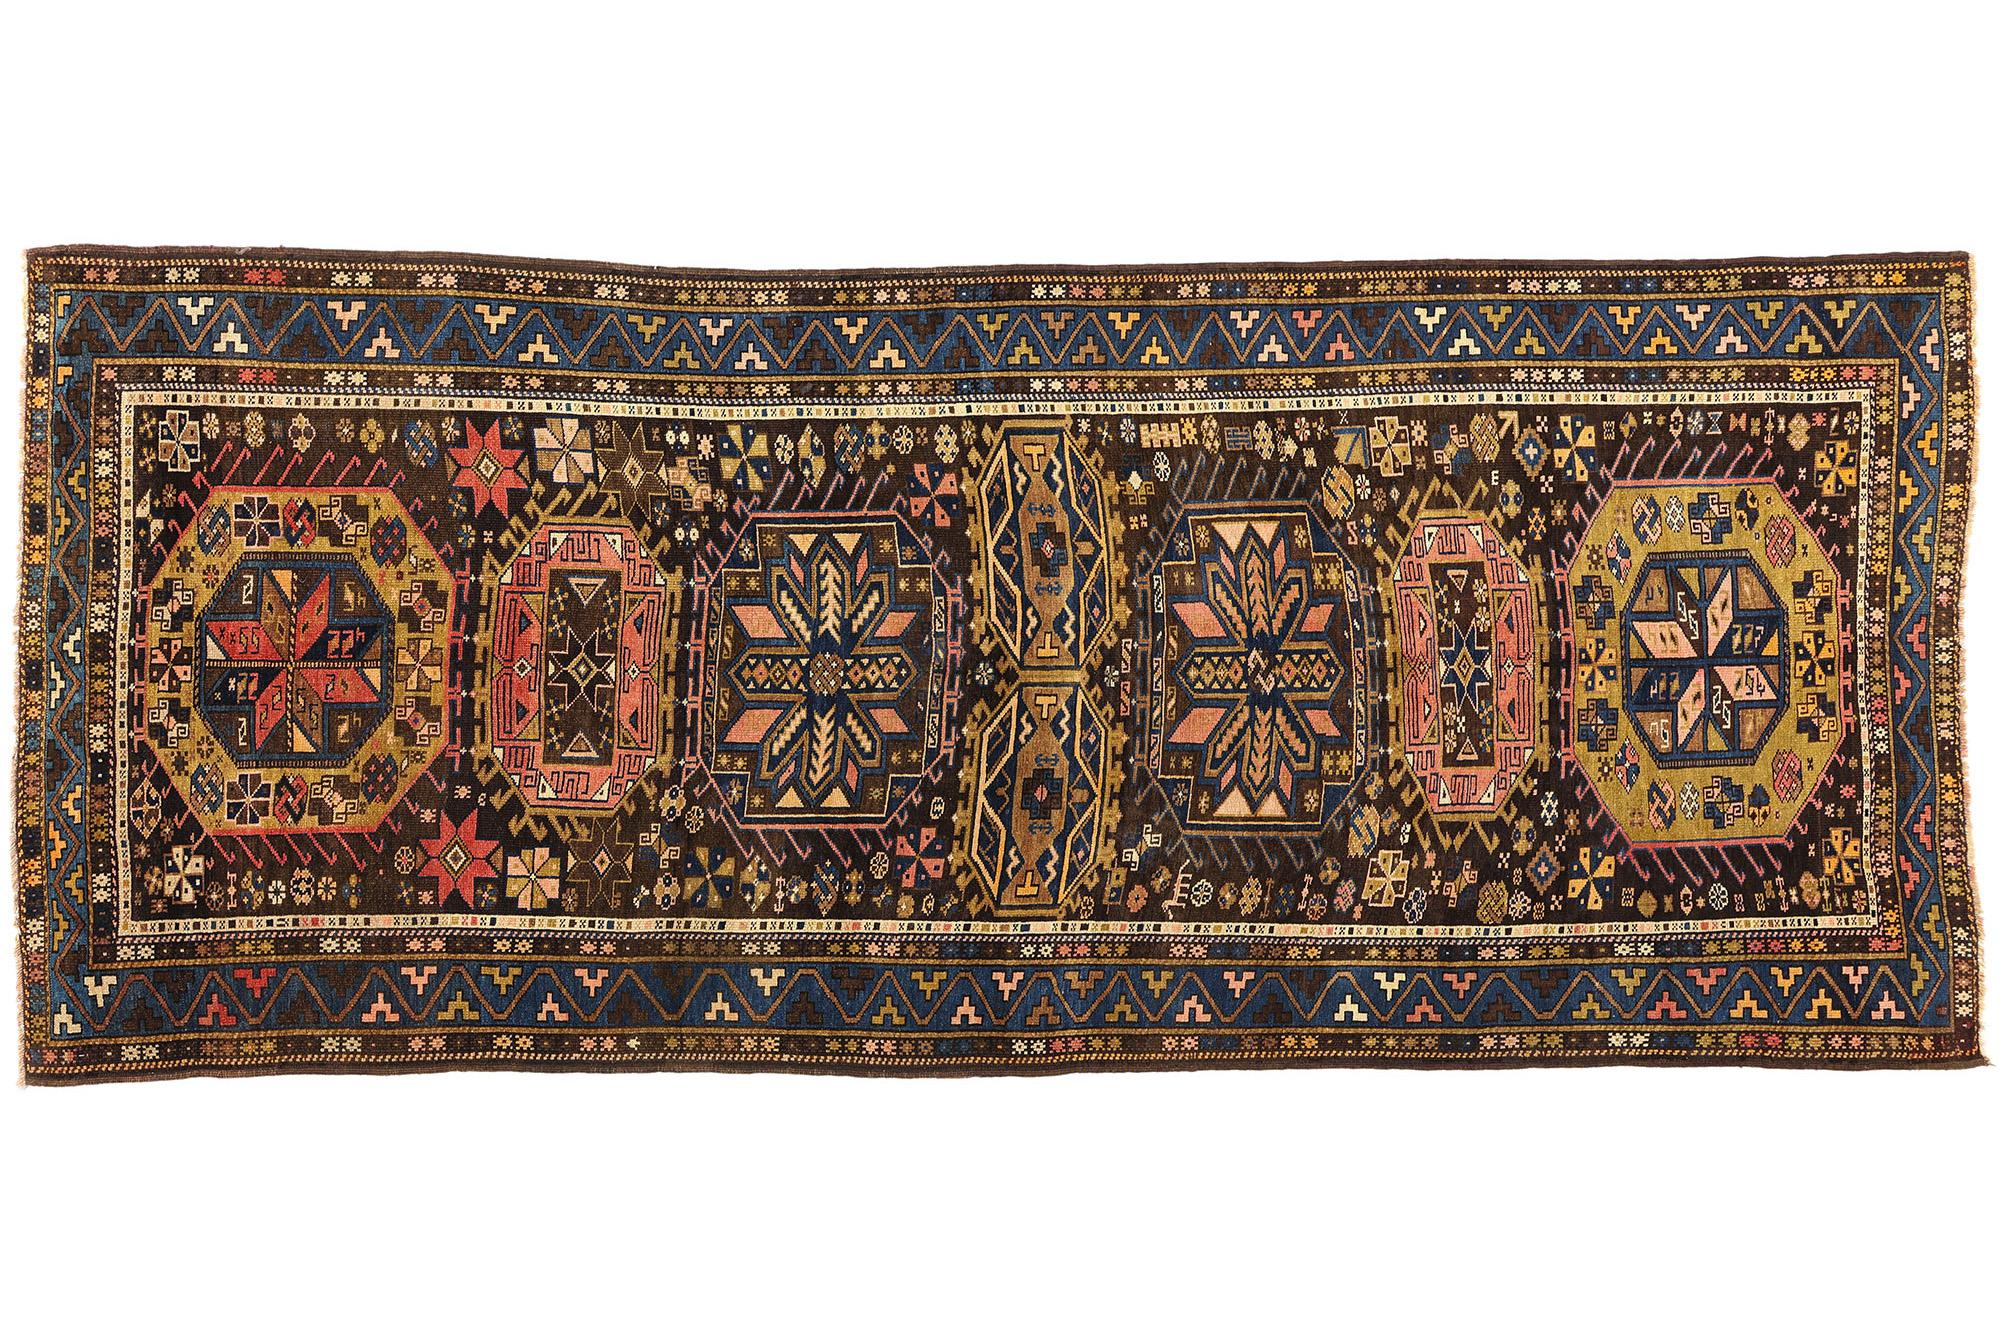 Late 19th Century Antique Caucasian Tribal Carpet For Sale 4